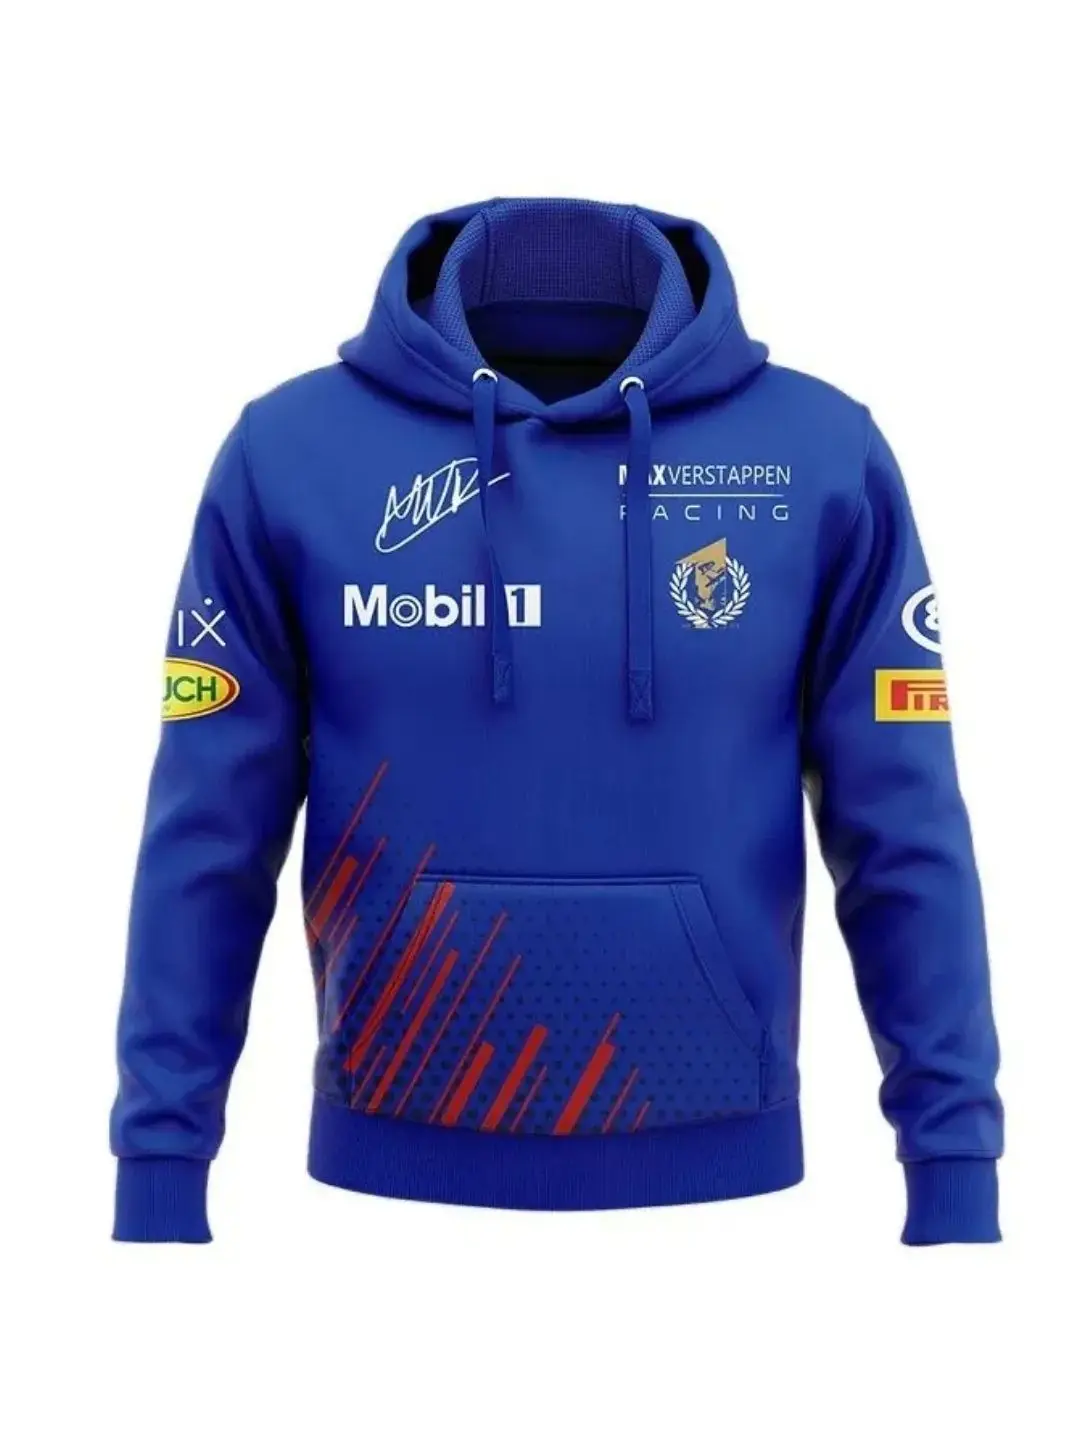 Adult F1 Vintage Racing Jacket Navy Blue Ebroidered Red Bull Jacket